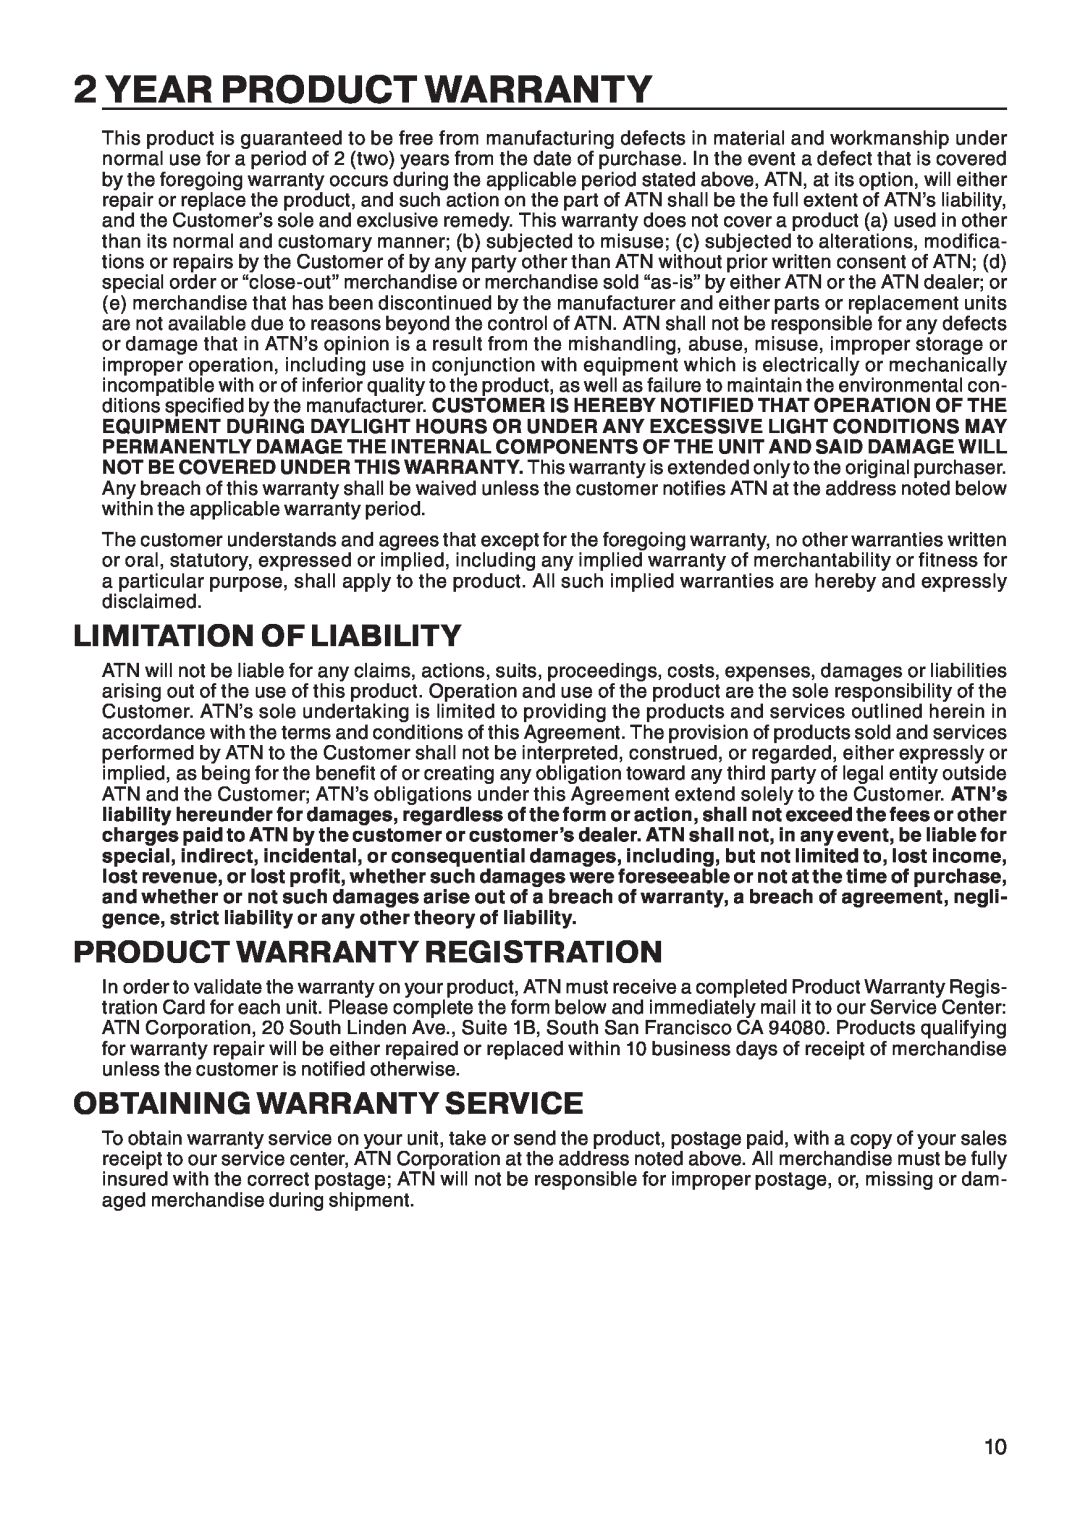 ATN Mk6500 manual Year Product Warranty, Limitation Of Liability, Product Warranty Registration, Obtaining Warranty Service 